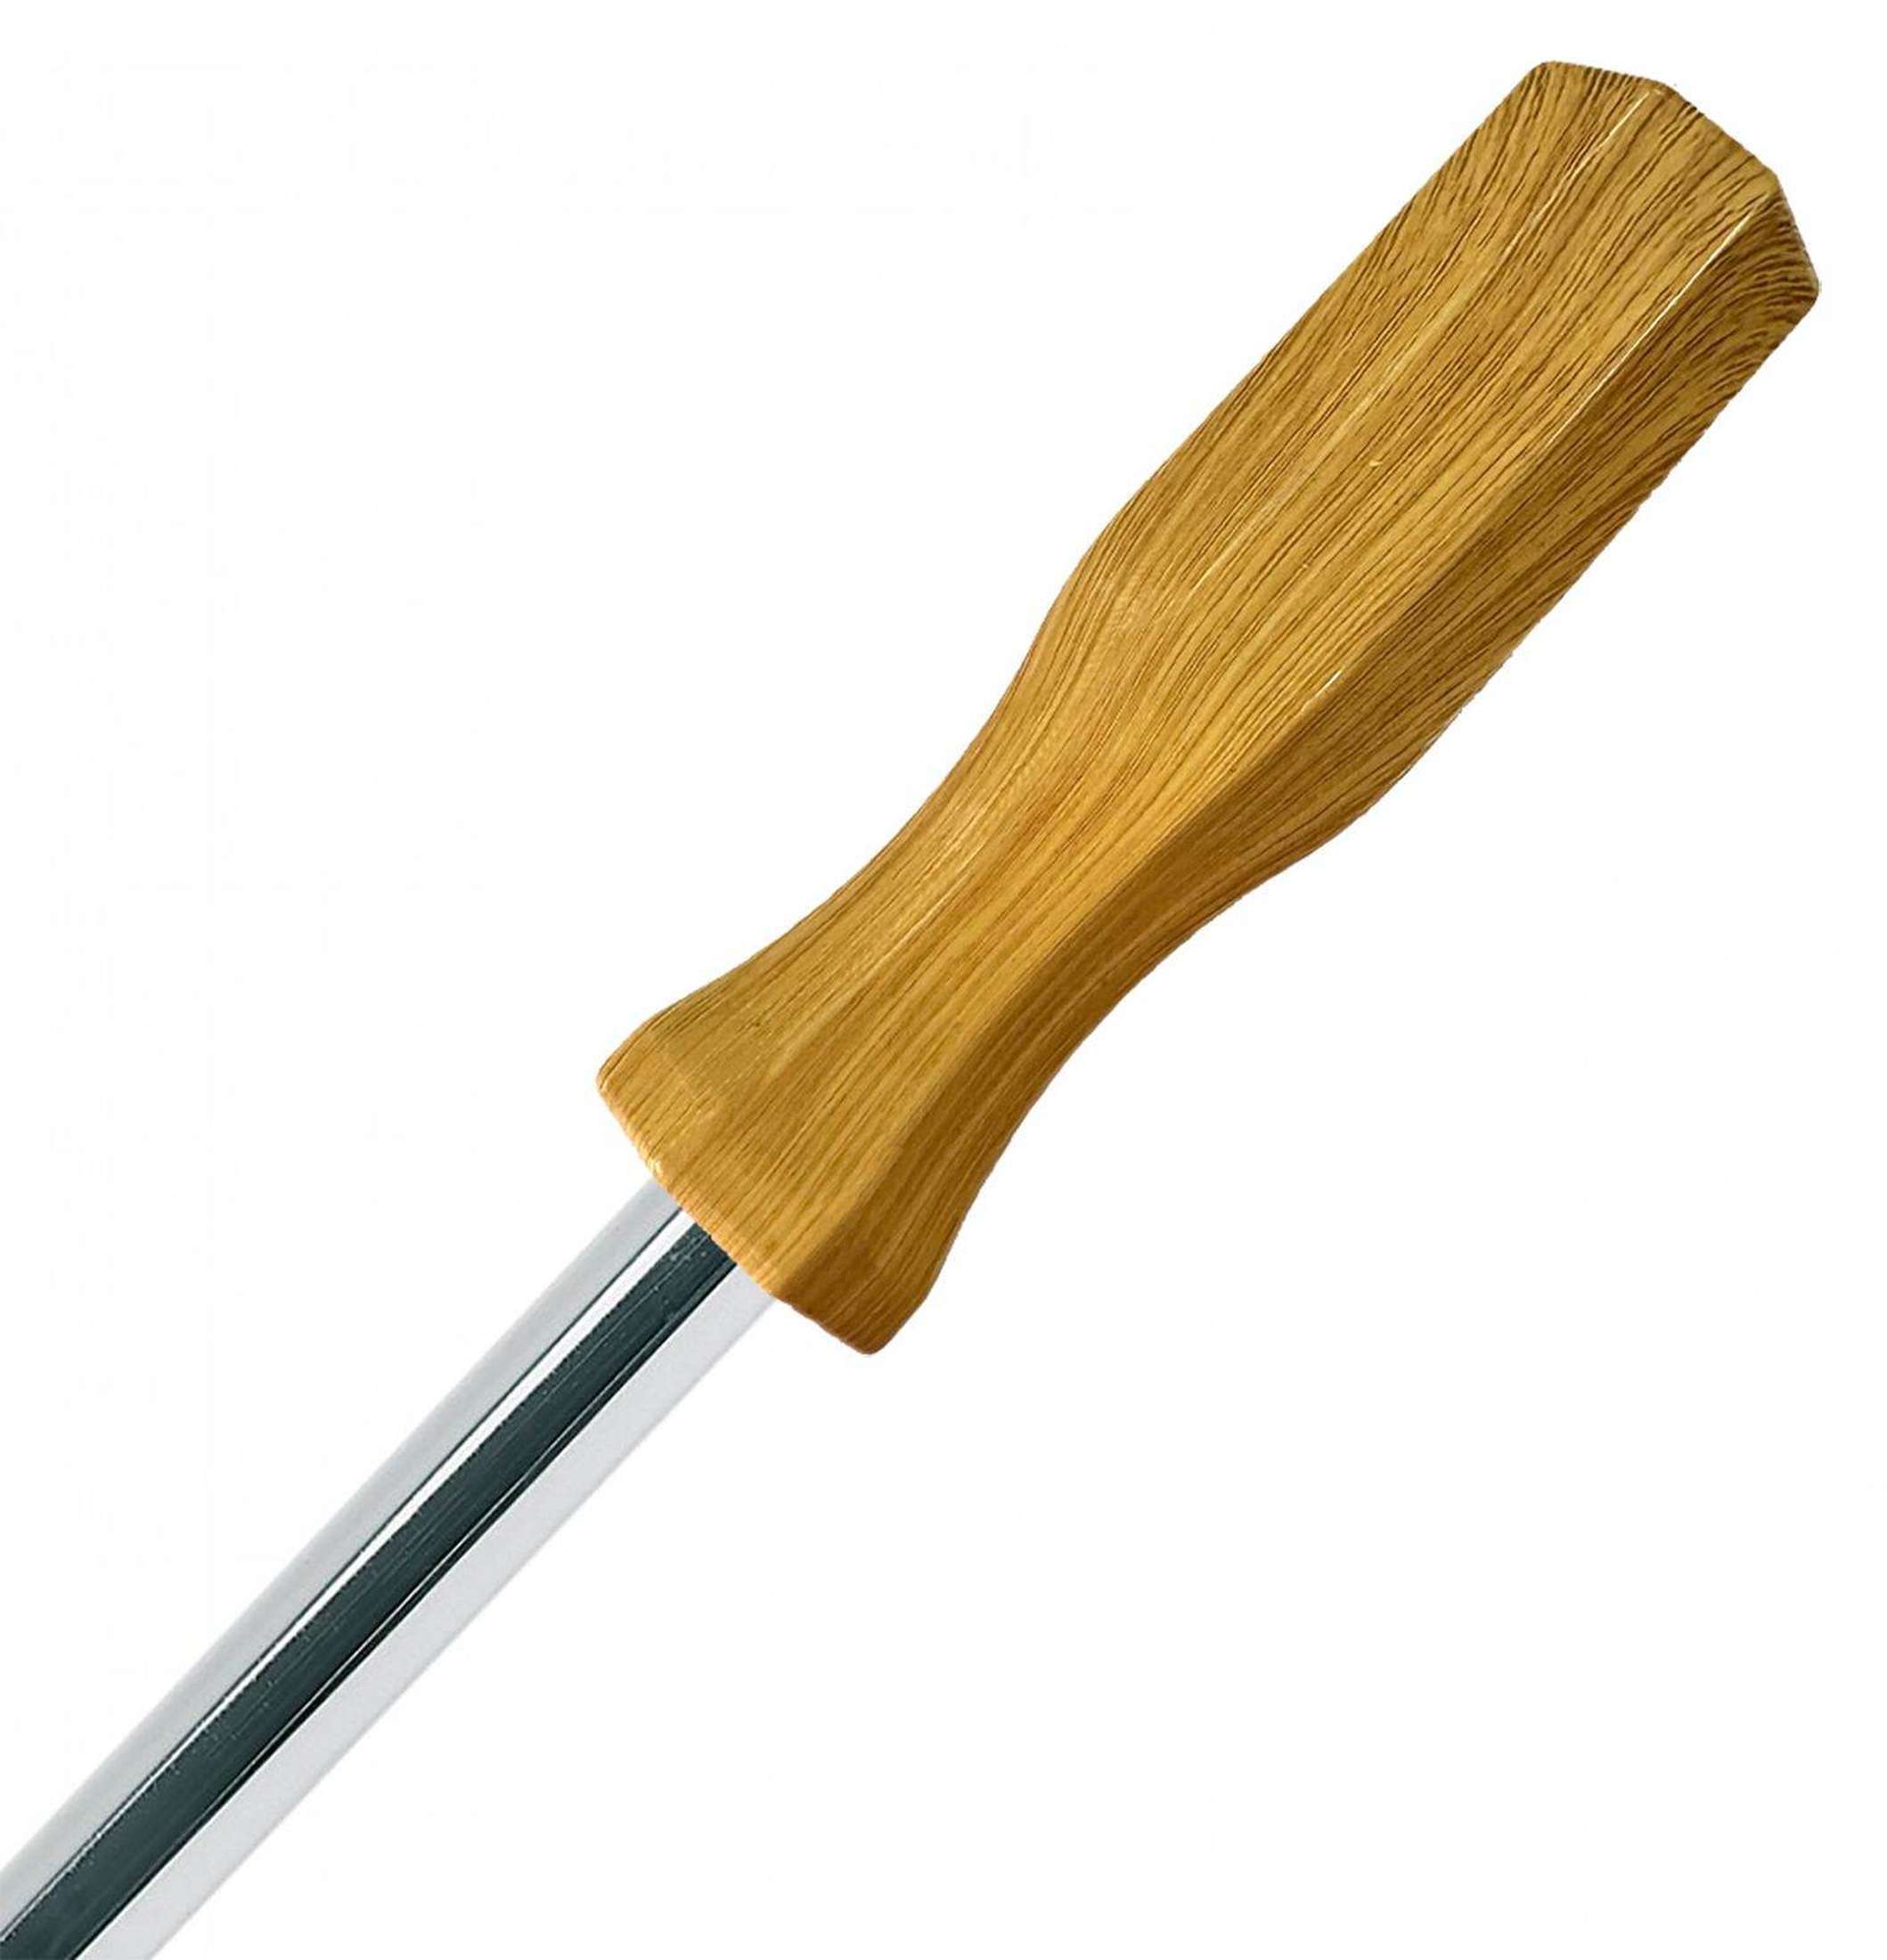 Kicker handle wood, 12cm long-1